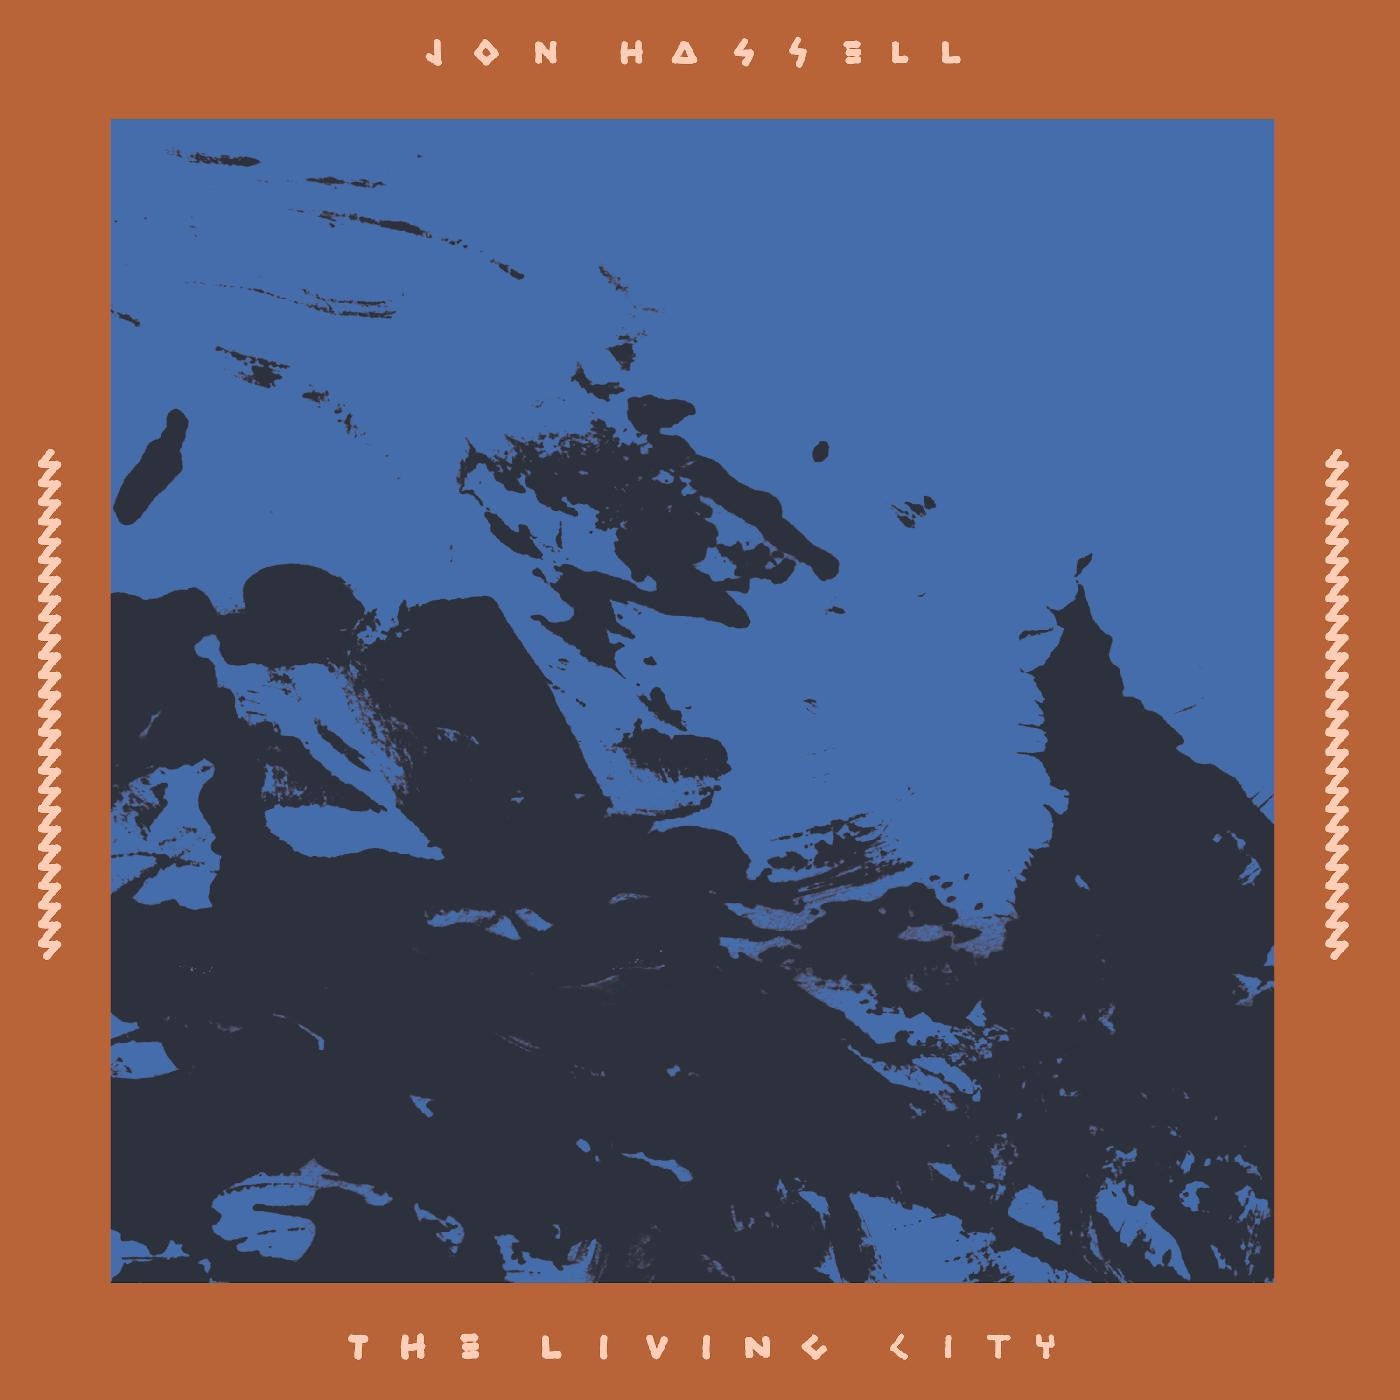 Jon Hassell - The Living City (Live at the Winter Garden 17 September 1989) - New 2 LP Record 2023 Ndeya UK Vinyl - Jazz / Dub / Fourth World